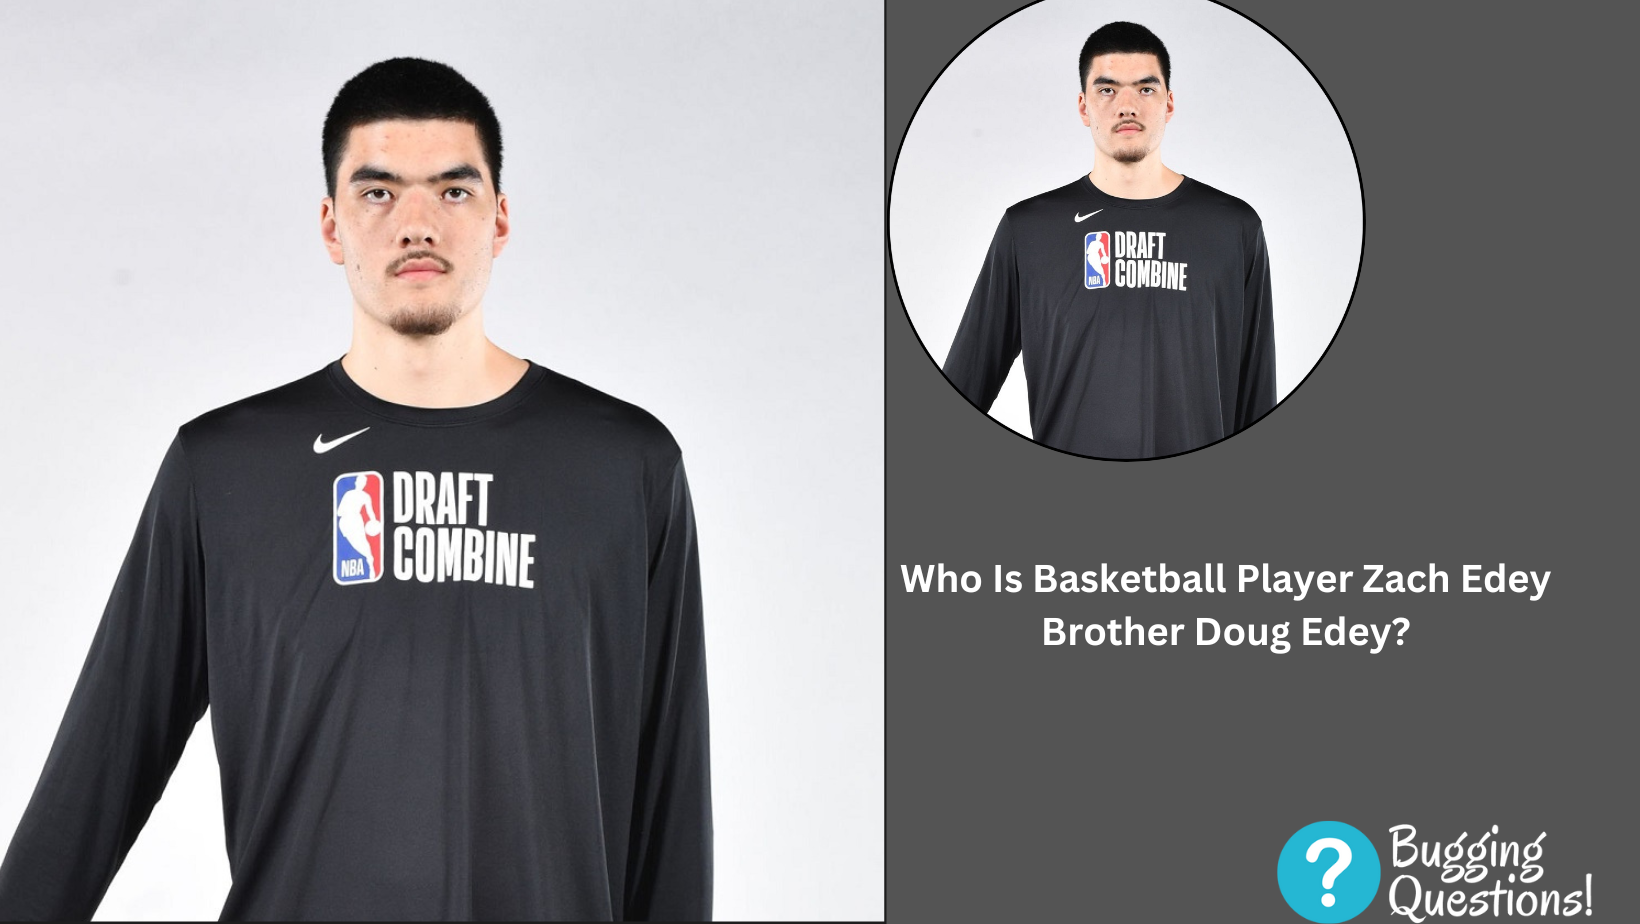 Who Is Basketball Player Zach Edey Brother Doug Edey?